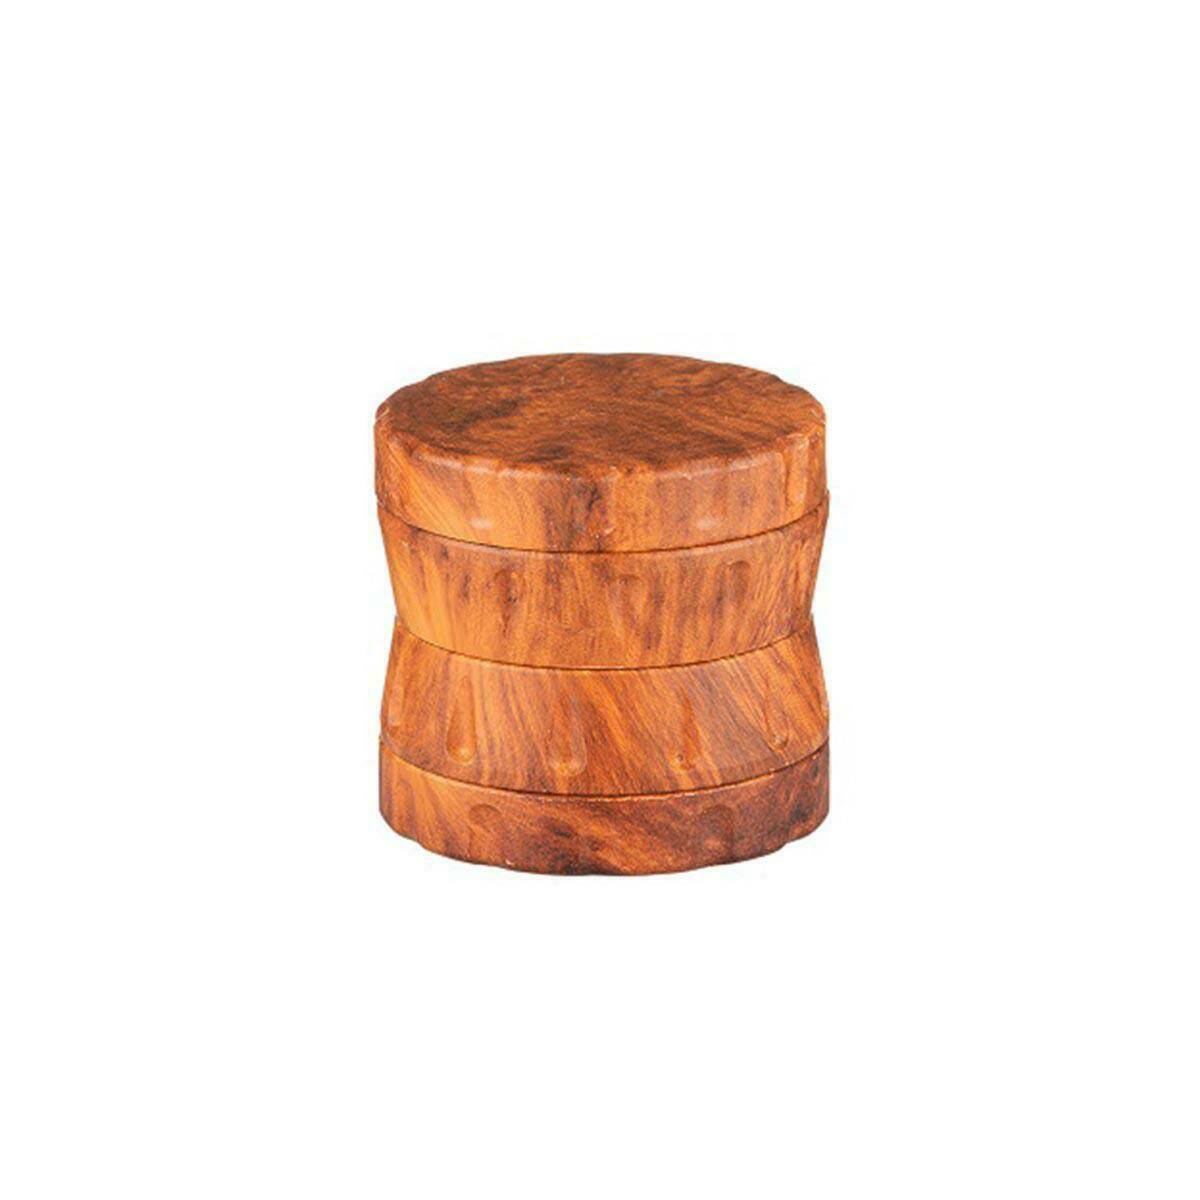 SEL-Tobacco grinder - Wooden metal